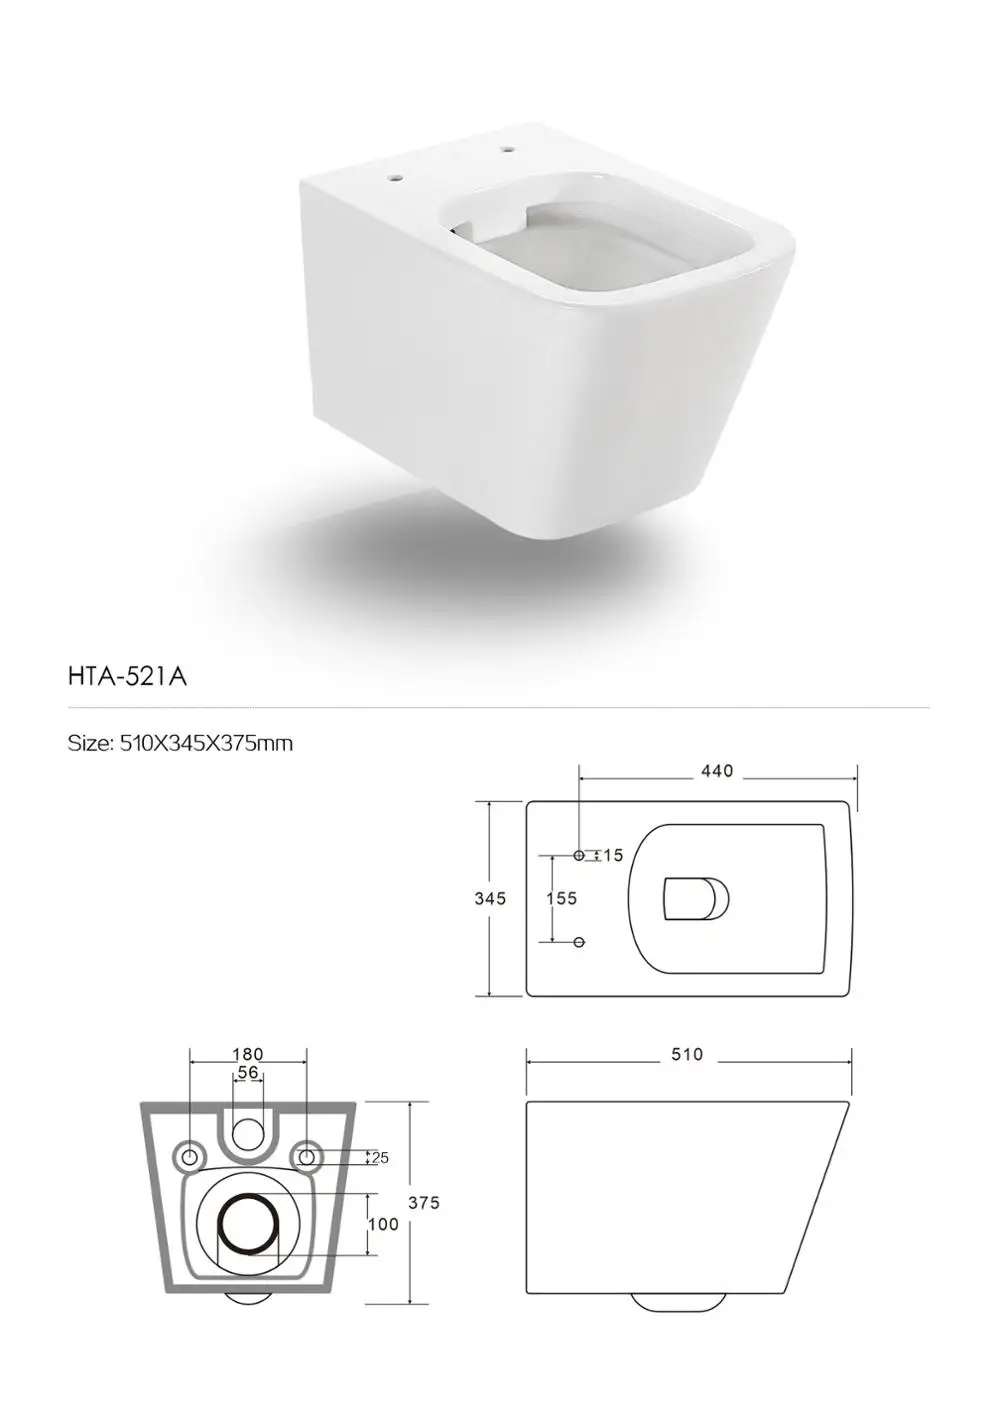 Ali baba best sellers 2020 HTA-521 bathroom accessories mounted new modern toilet ceramic wc